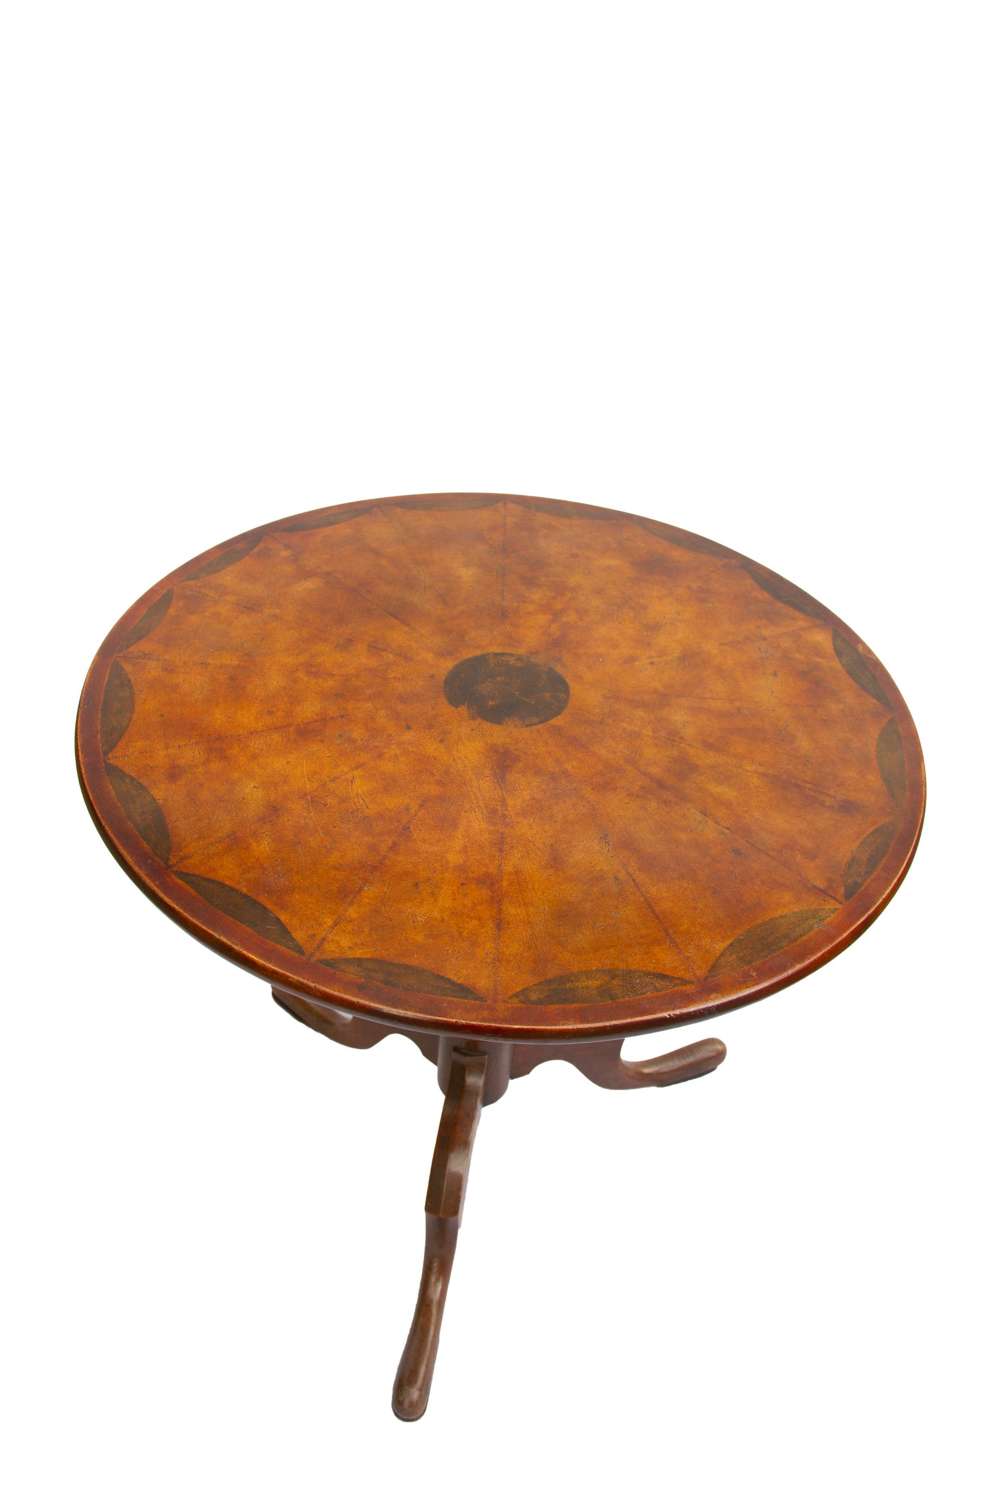 Folk Art 19th Century Table